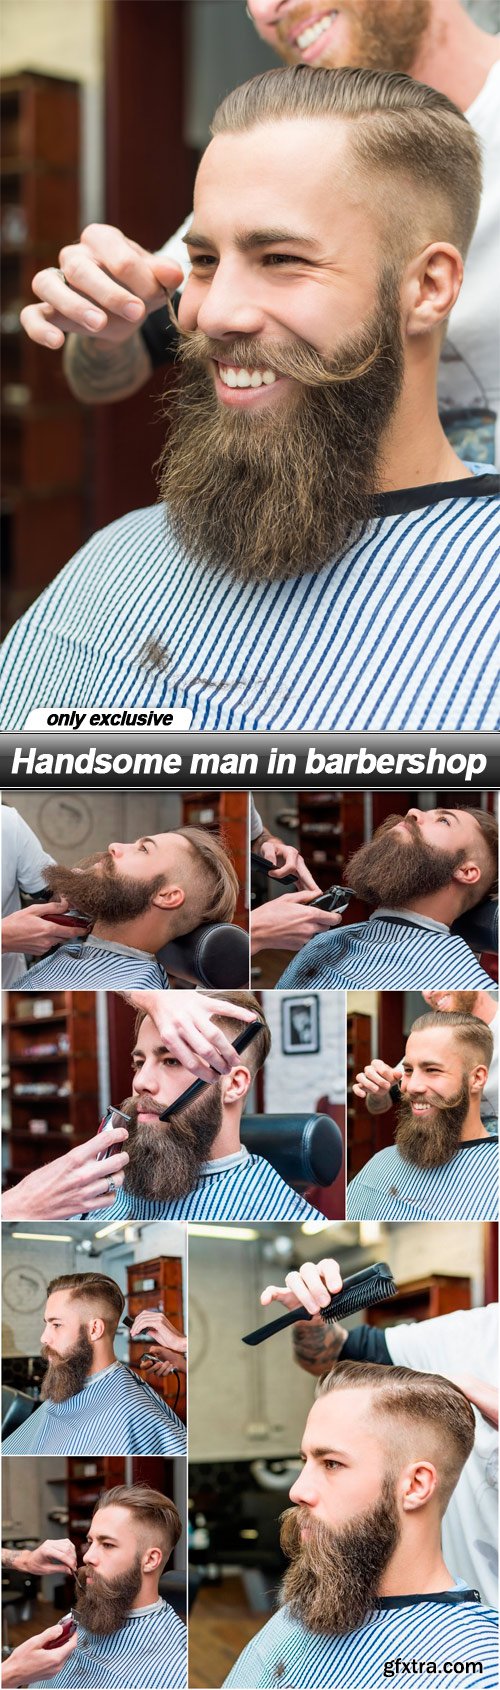 Handsome man in barbershop - 7 UHQ JPEG